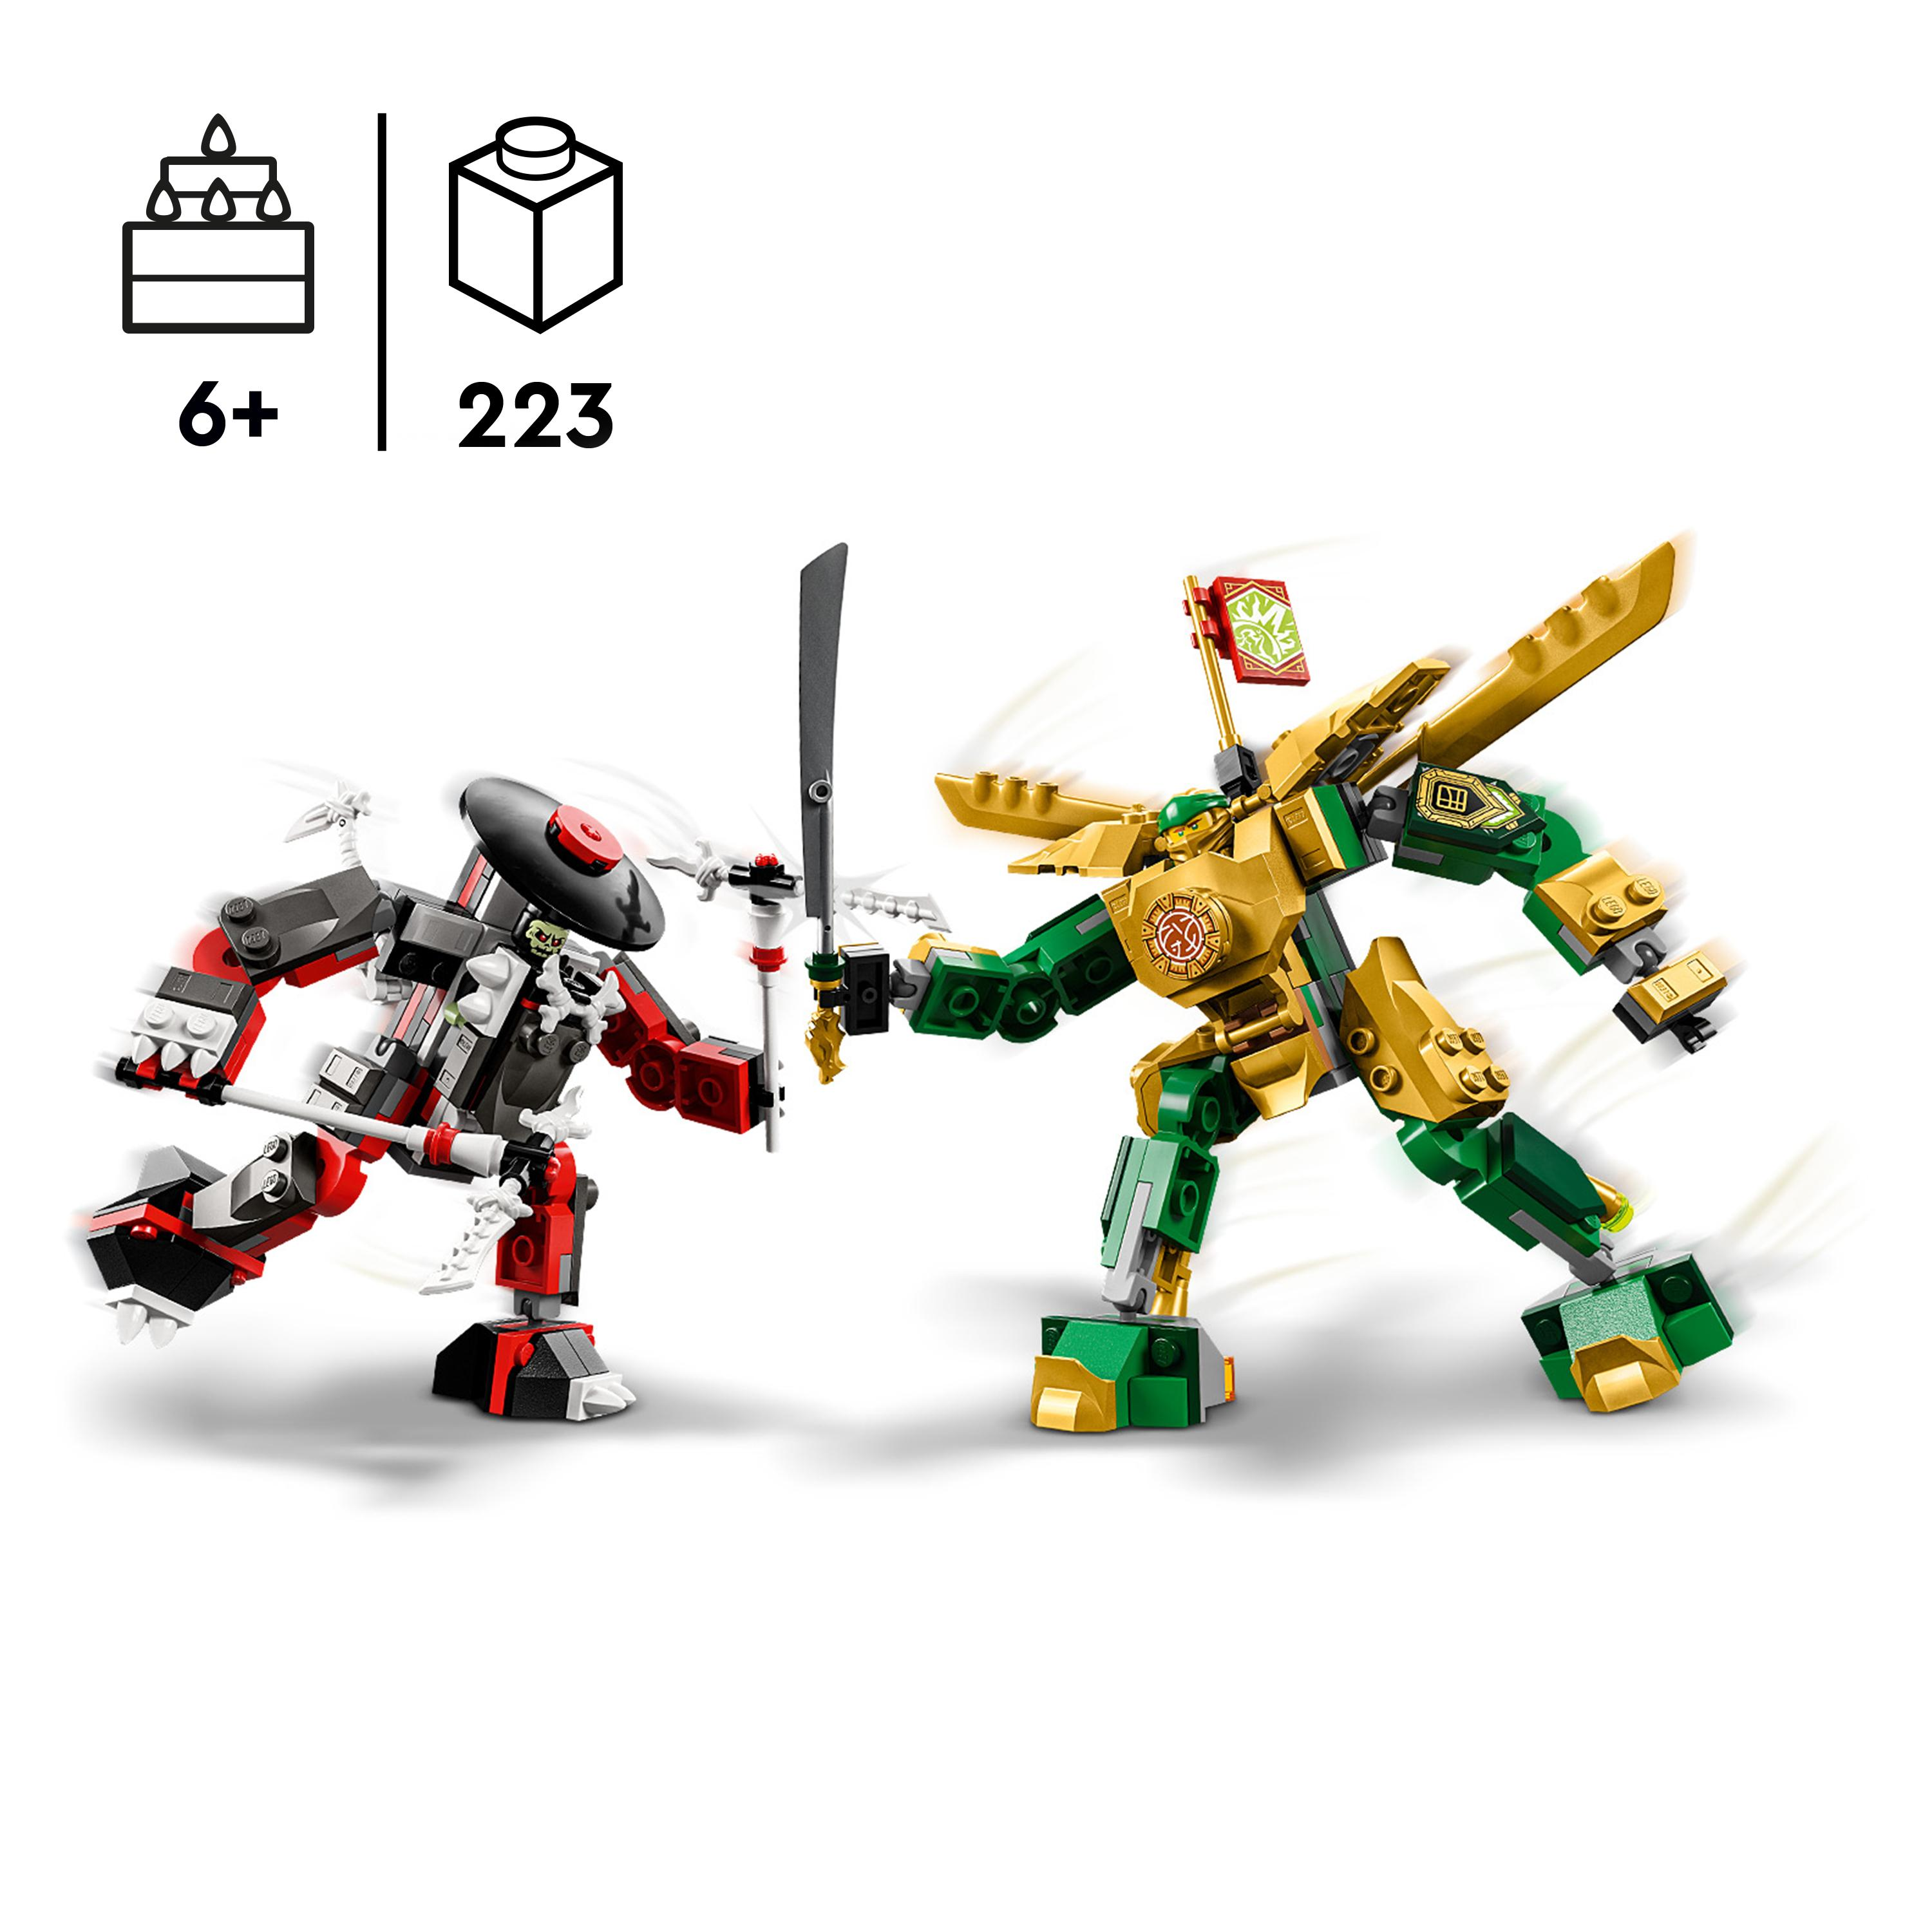 LEGO NINJAGO 71781 Mech-Duell EVO Bausatz, Lloyds Mehrfarbig